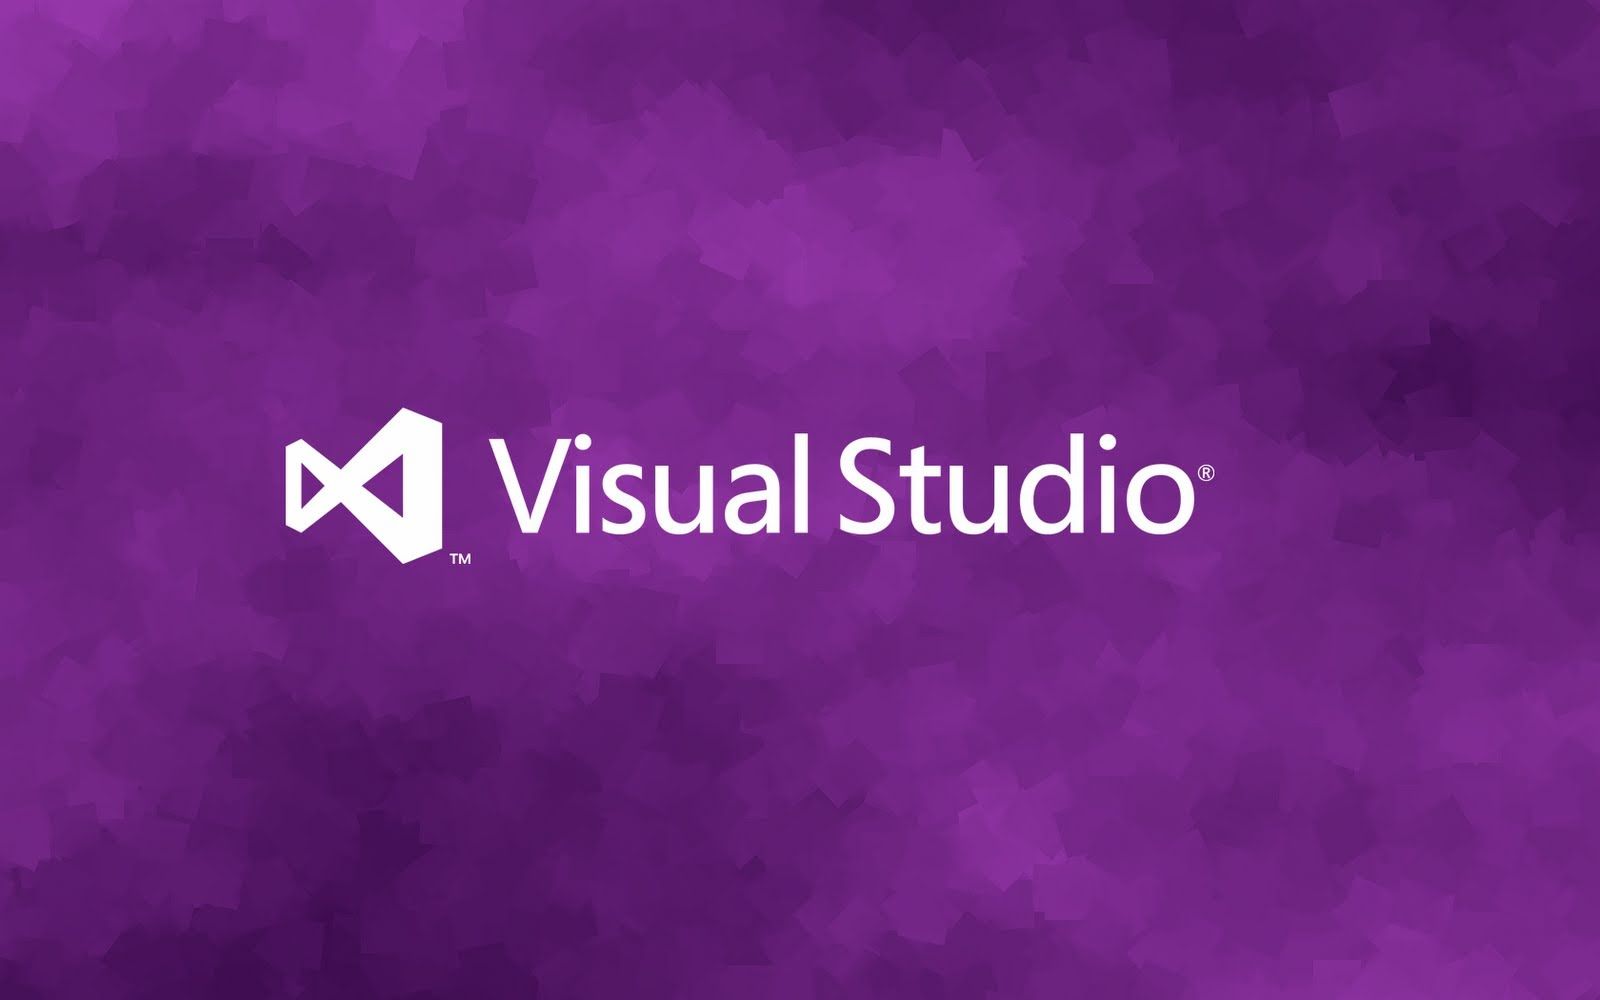 Visual Studio Wallpaper. Blur Studio Wallpaper, Visual Studio Wallpaper and Studio Background Scenery